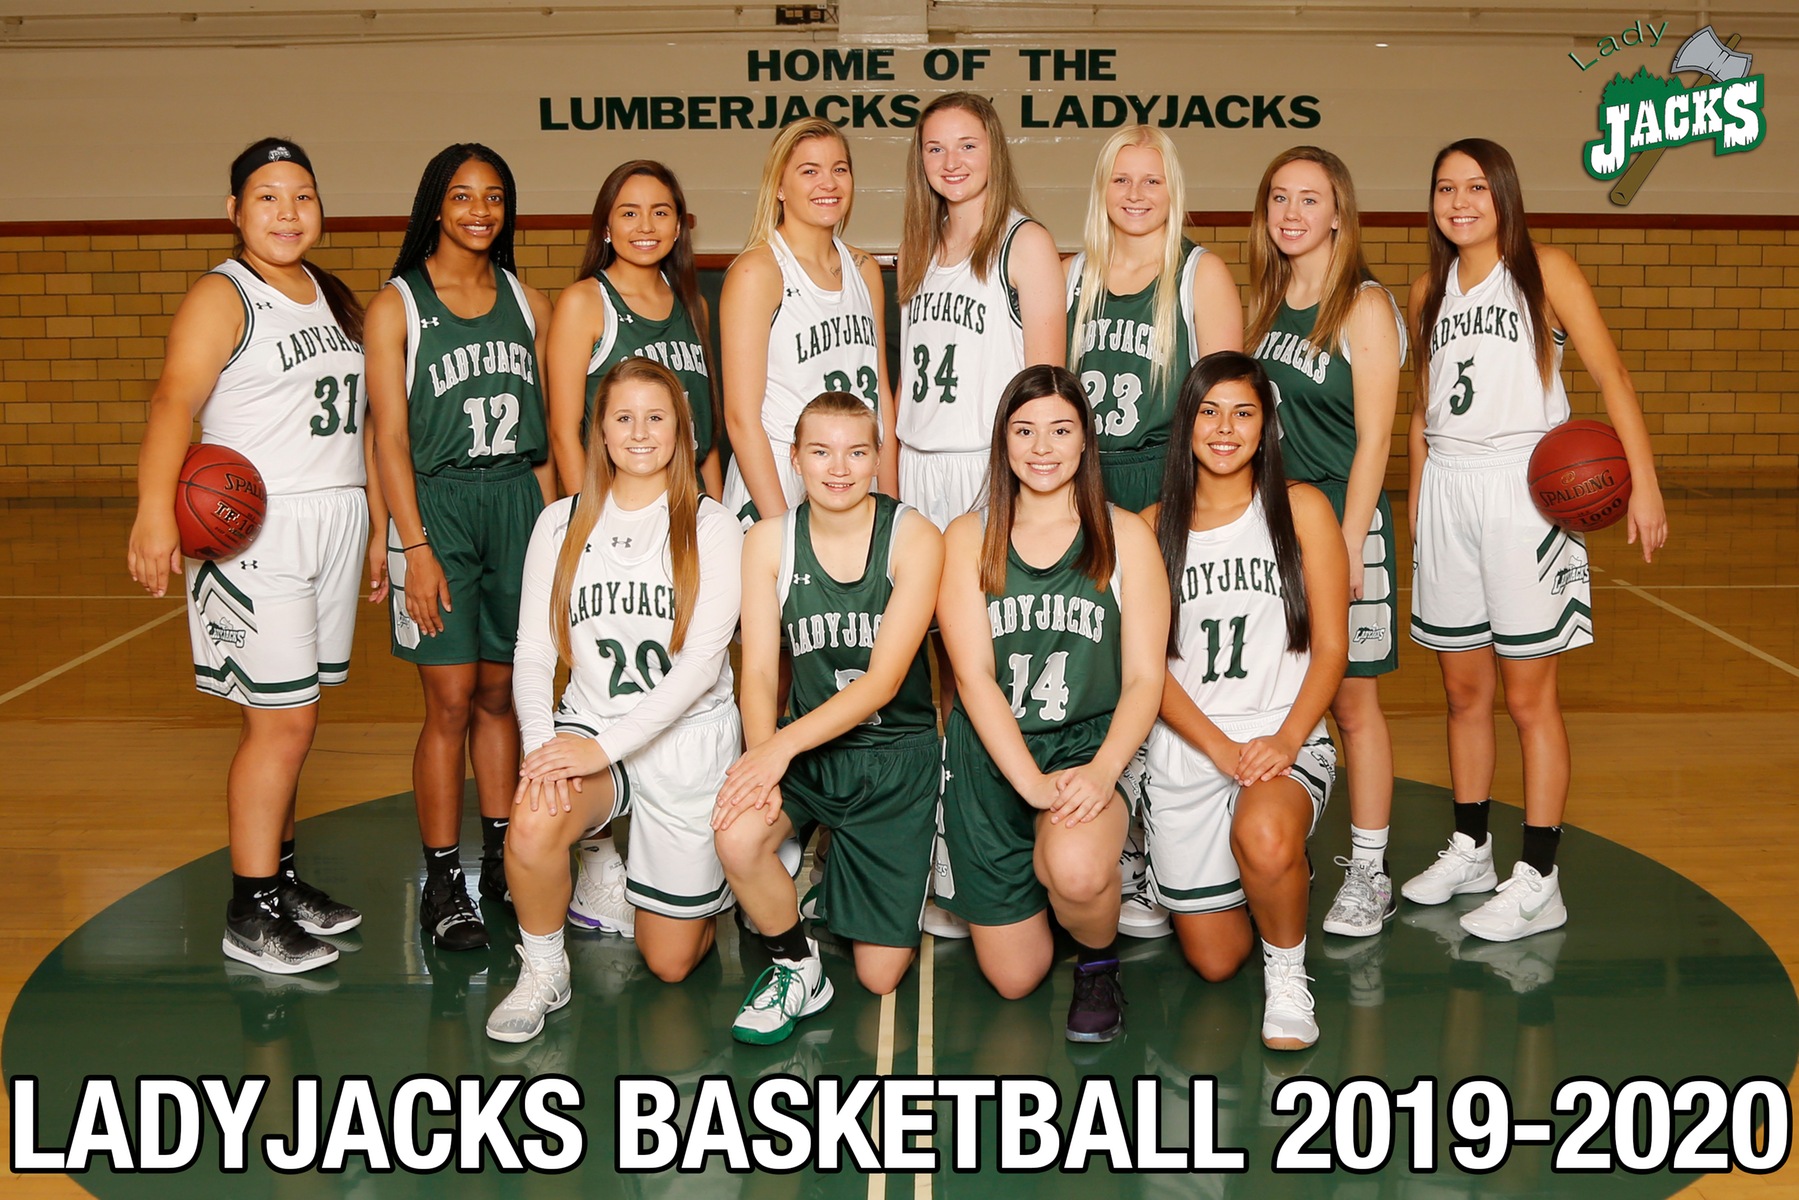 Ladyjacks Basketball Begins 2019-20 Season Friday Morning